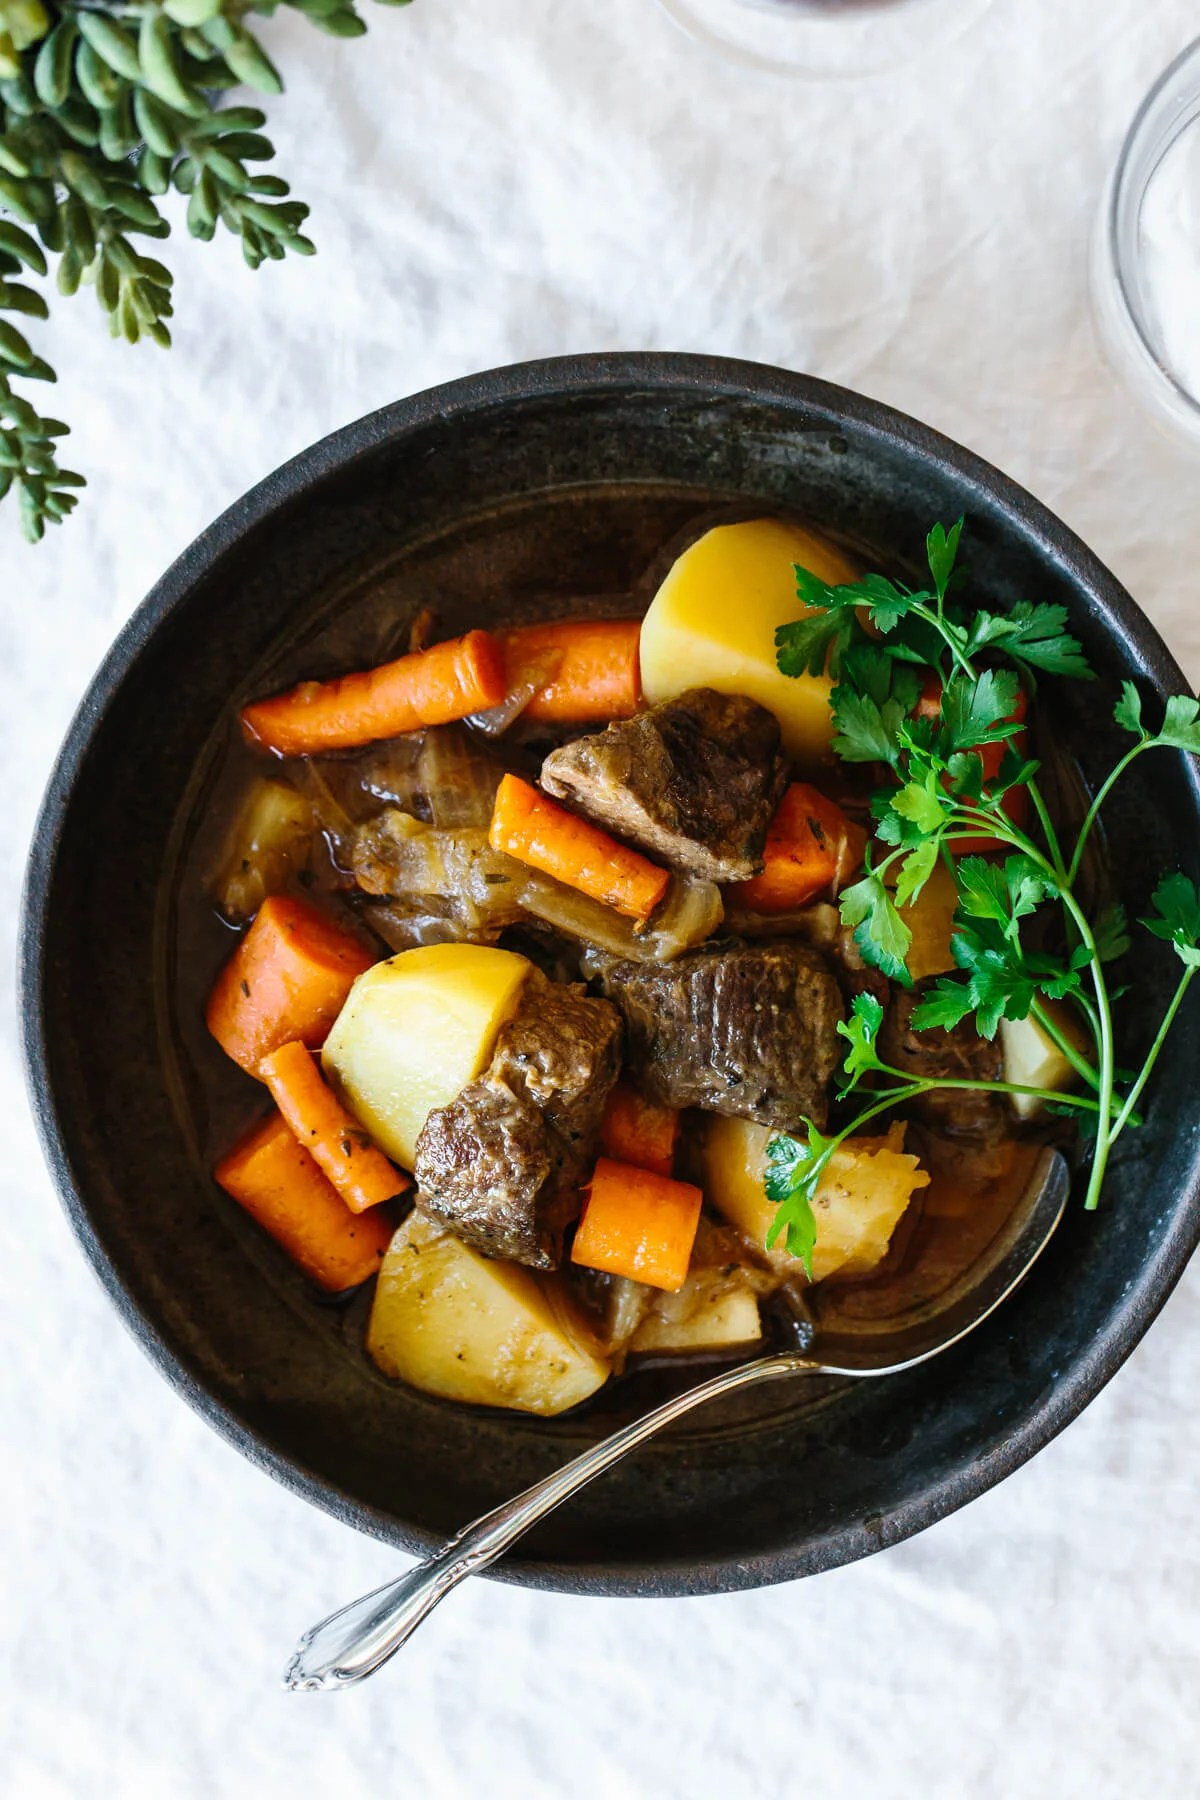 Lamb stew in a bowl.